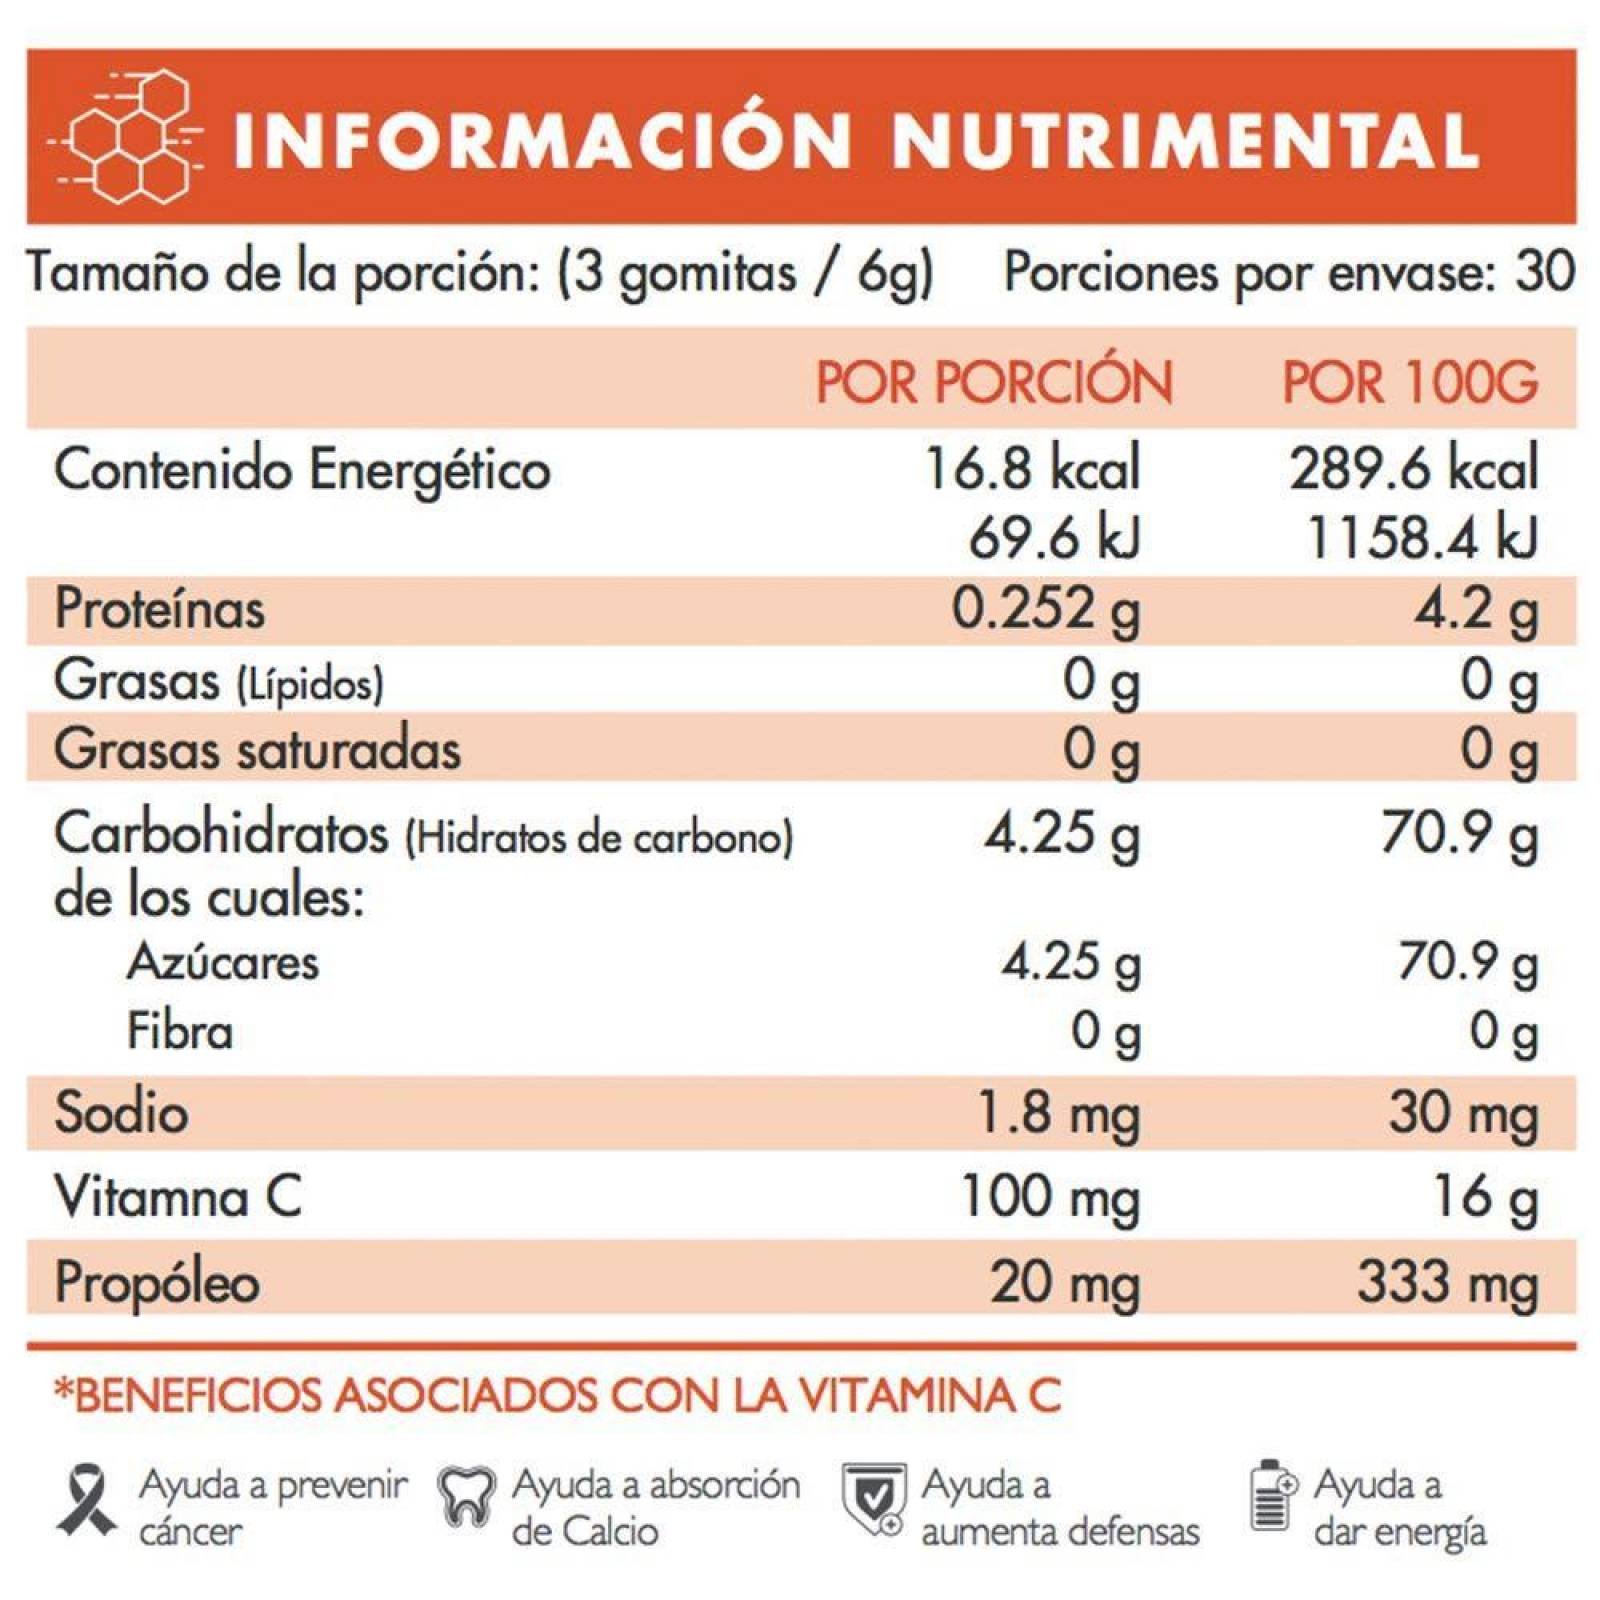 Vitamina C en gomitas GO-MMY GO Vita C 2 Frascos 